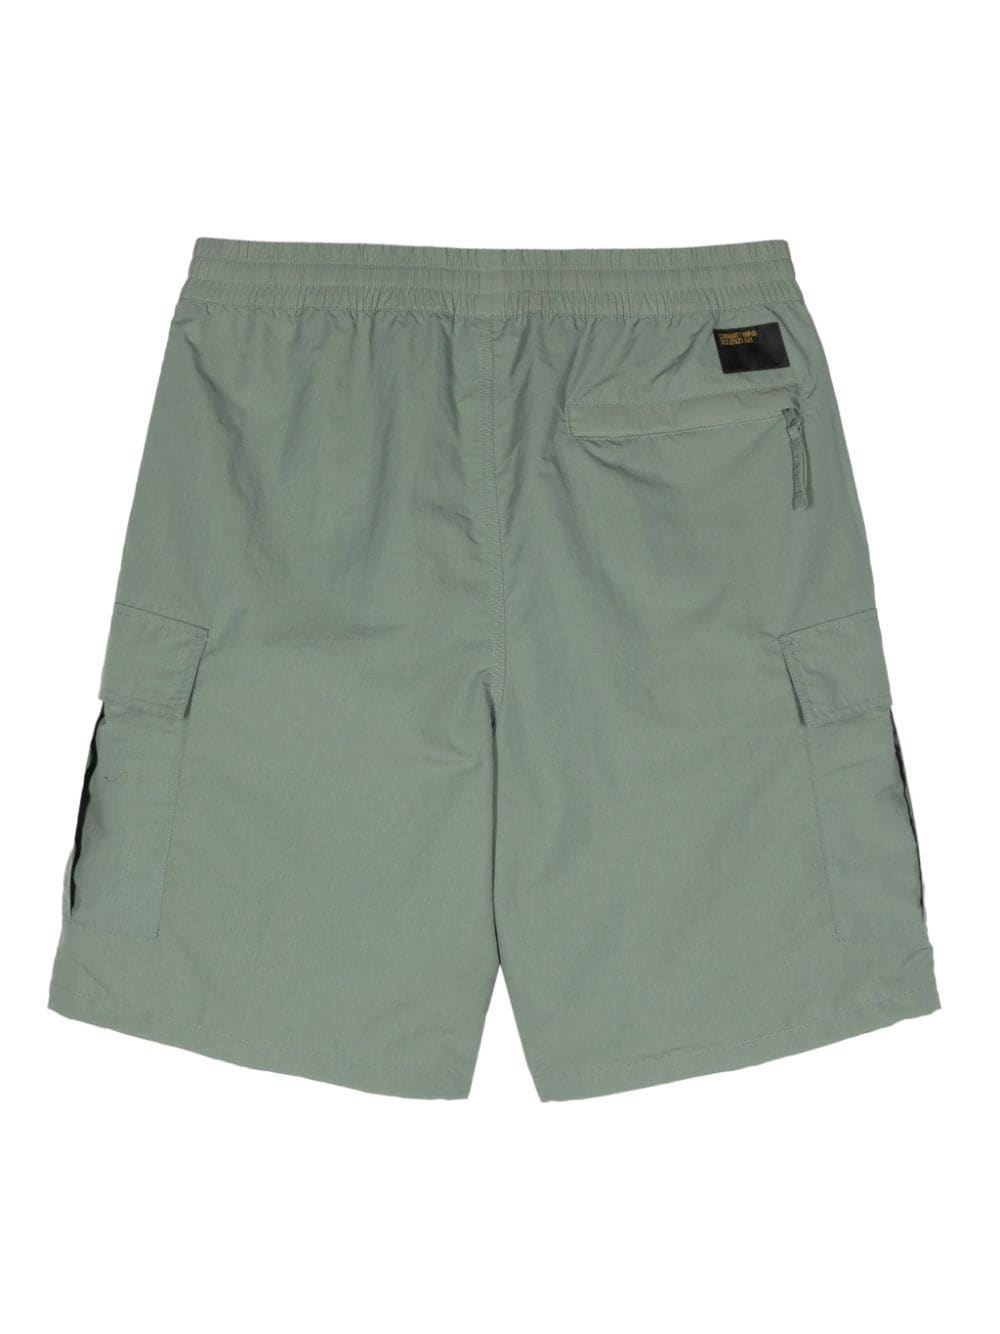 Carhartt WIP Evers cargo shorts - Groen